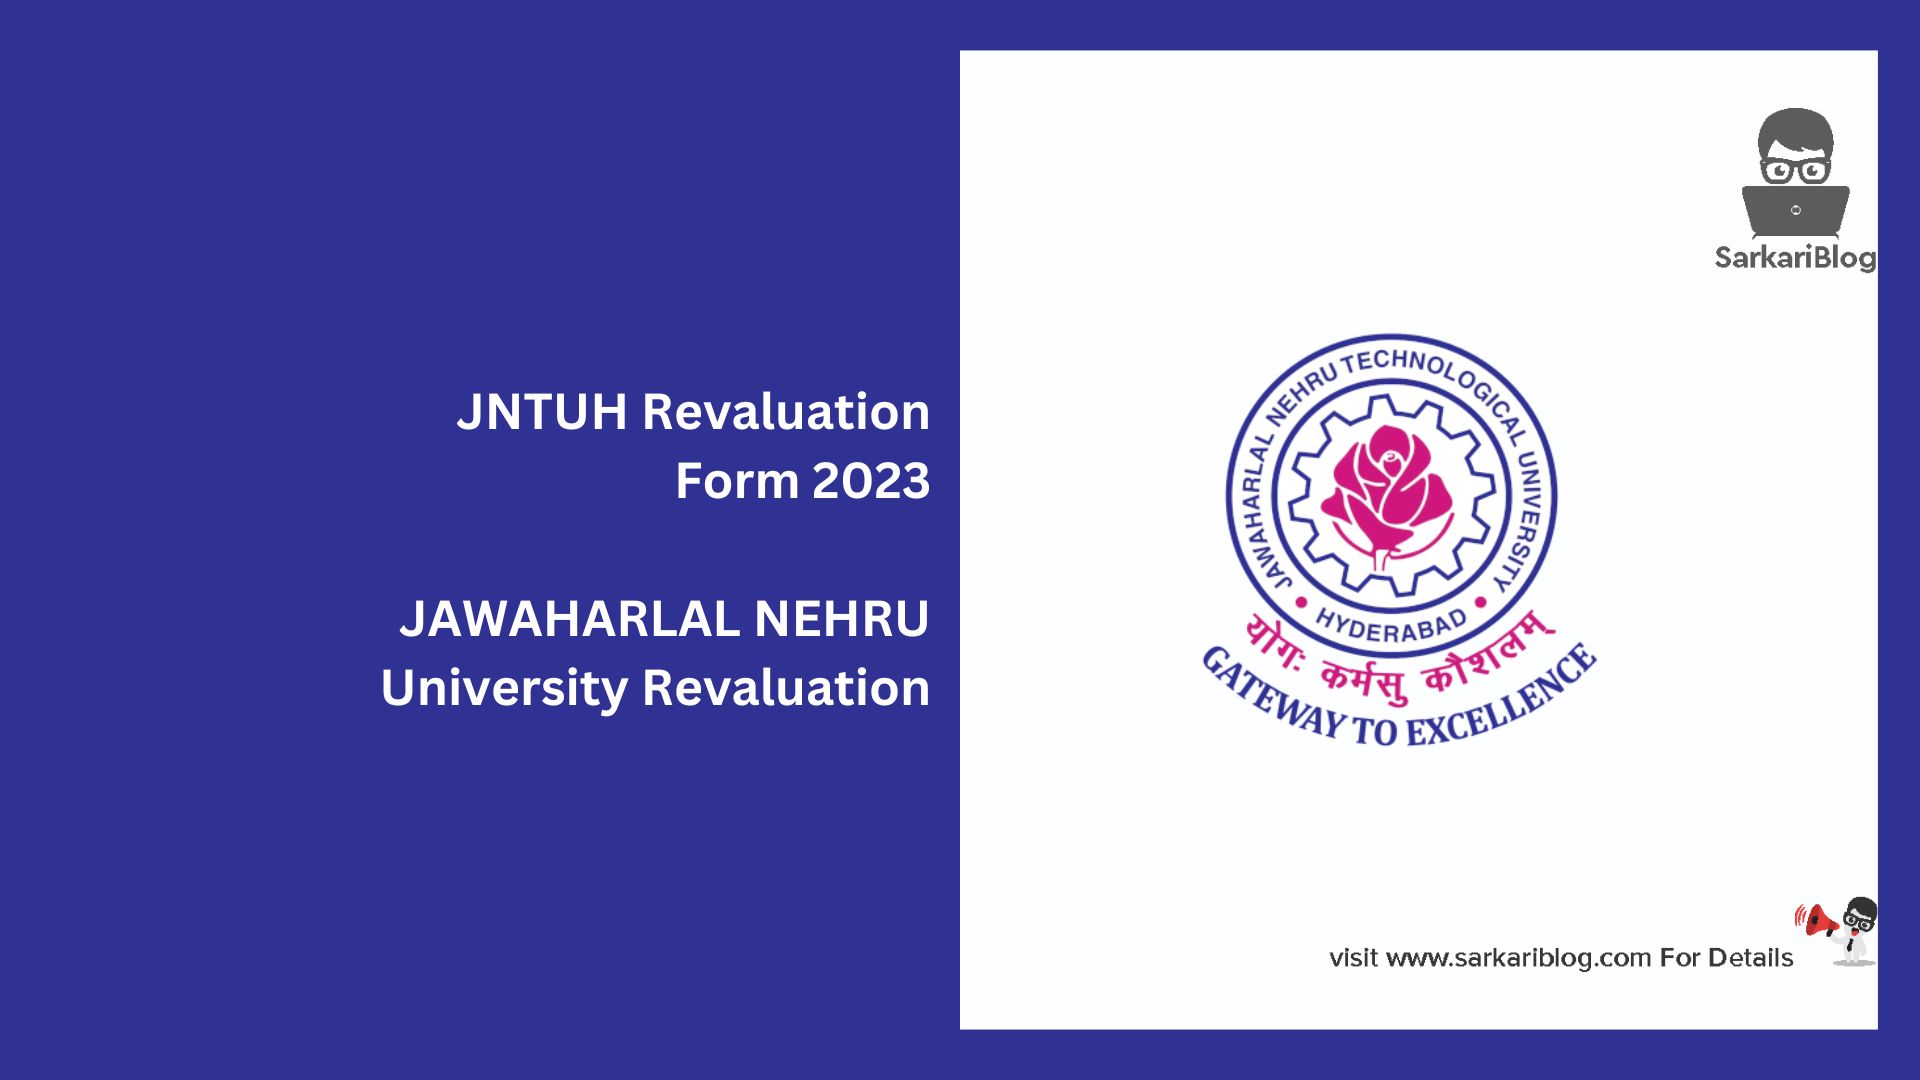 JNTUH Revaluation Form 2023